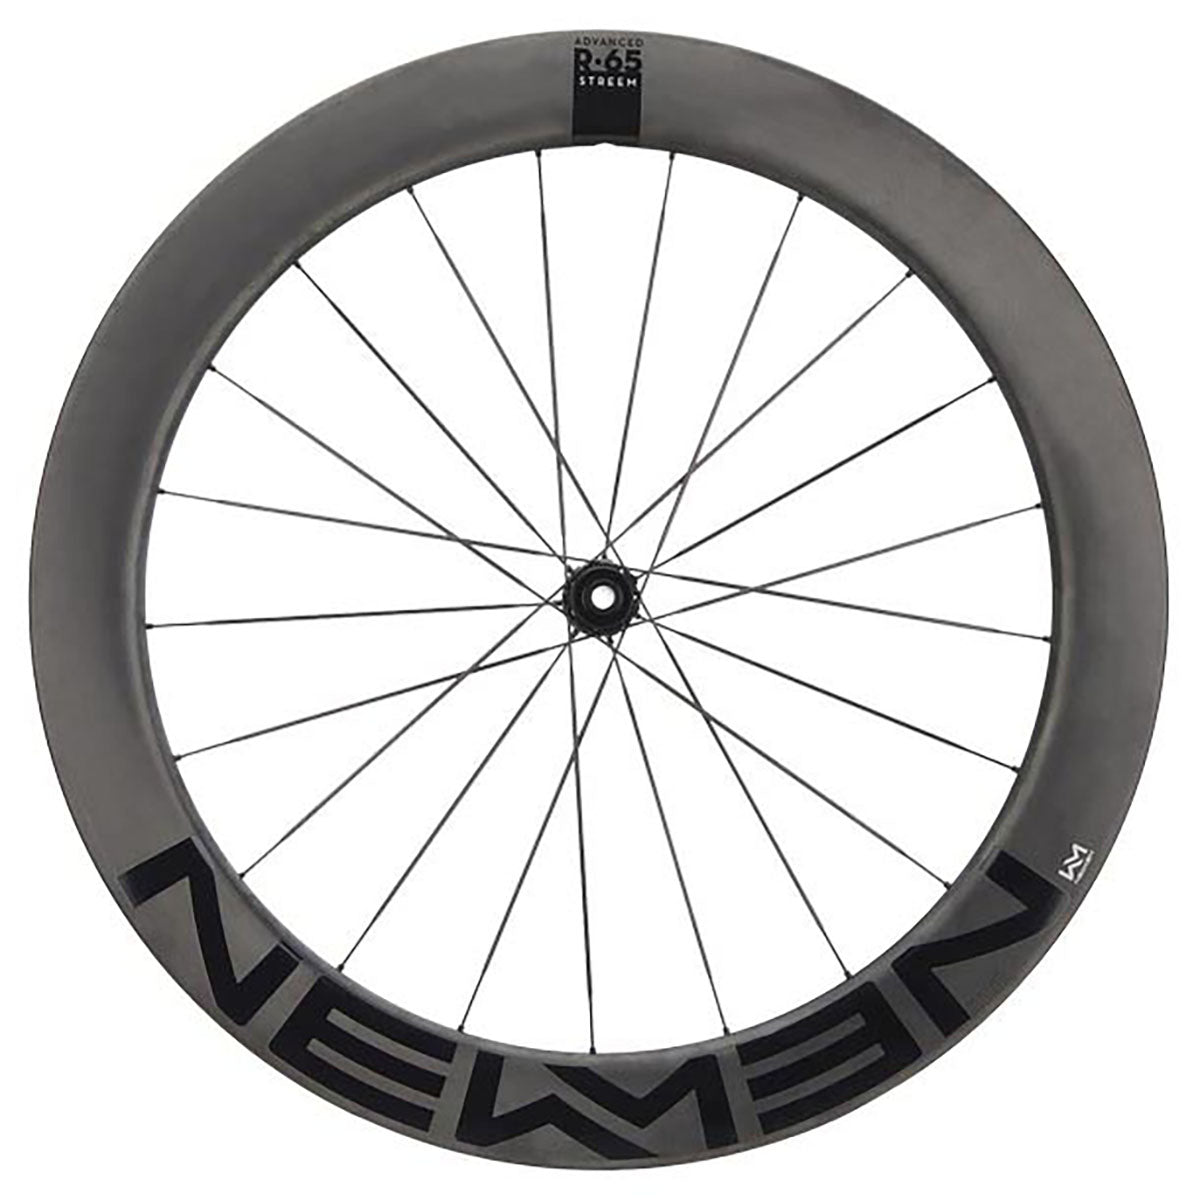 NEWMEN - Wheel (Front) - Advanced R.65 Streem VONOA | Road